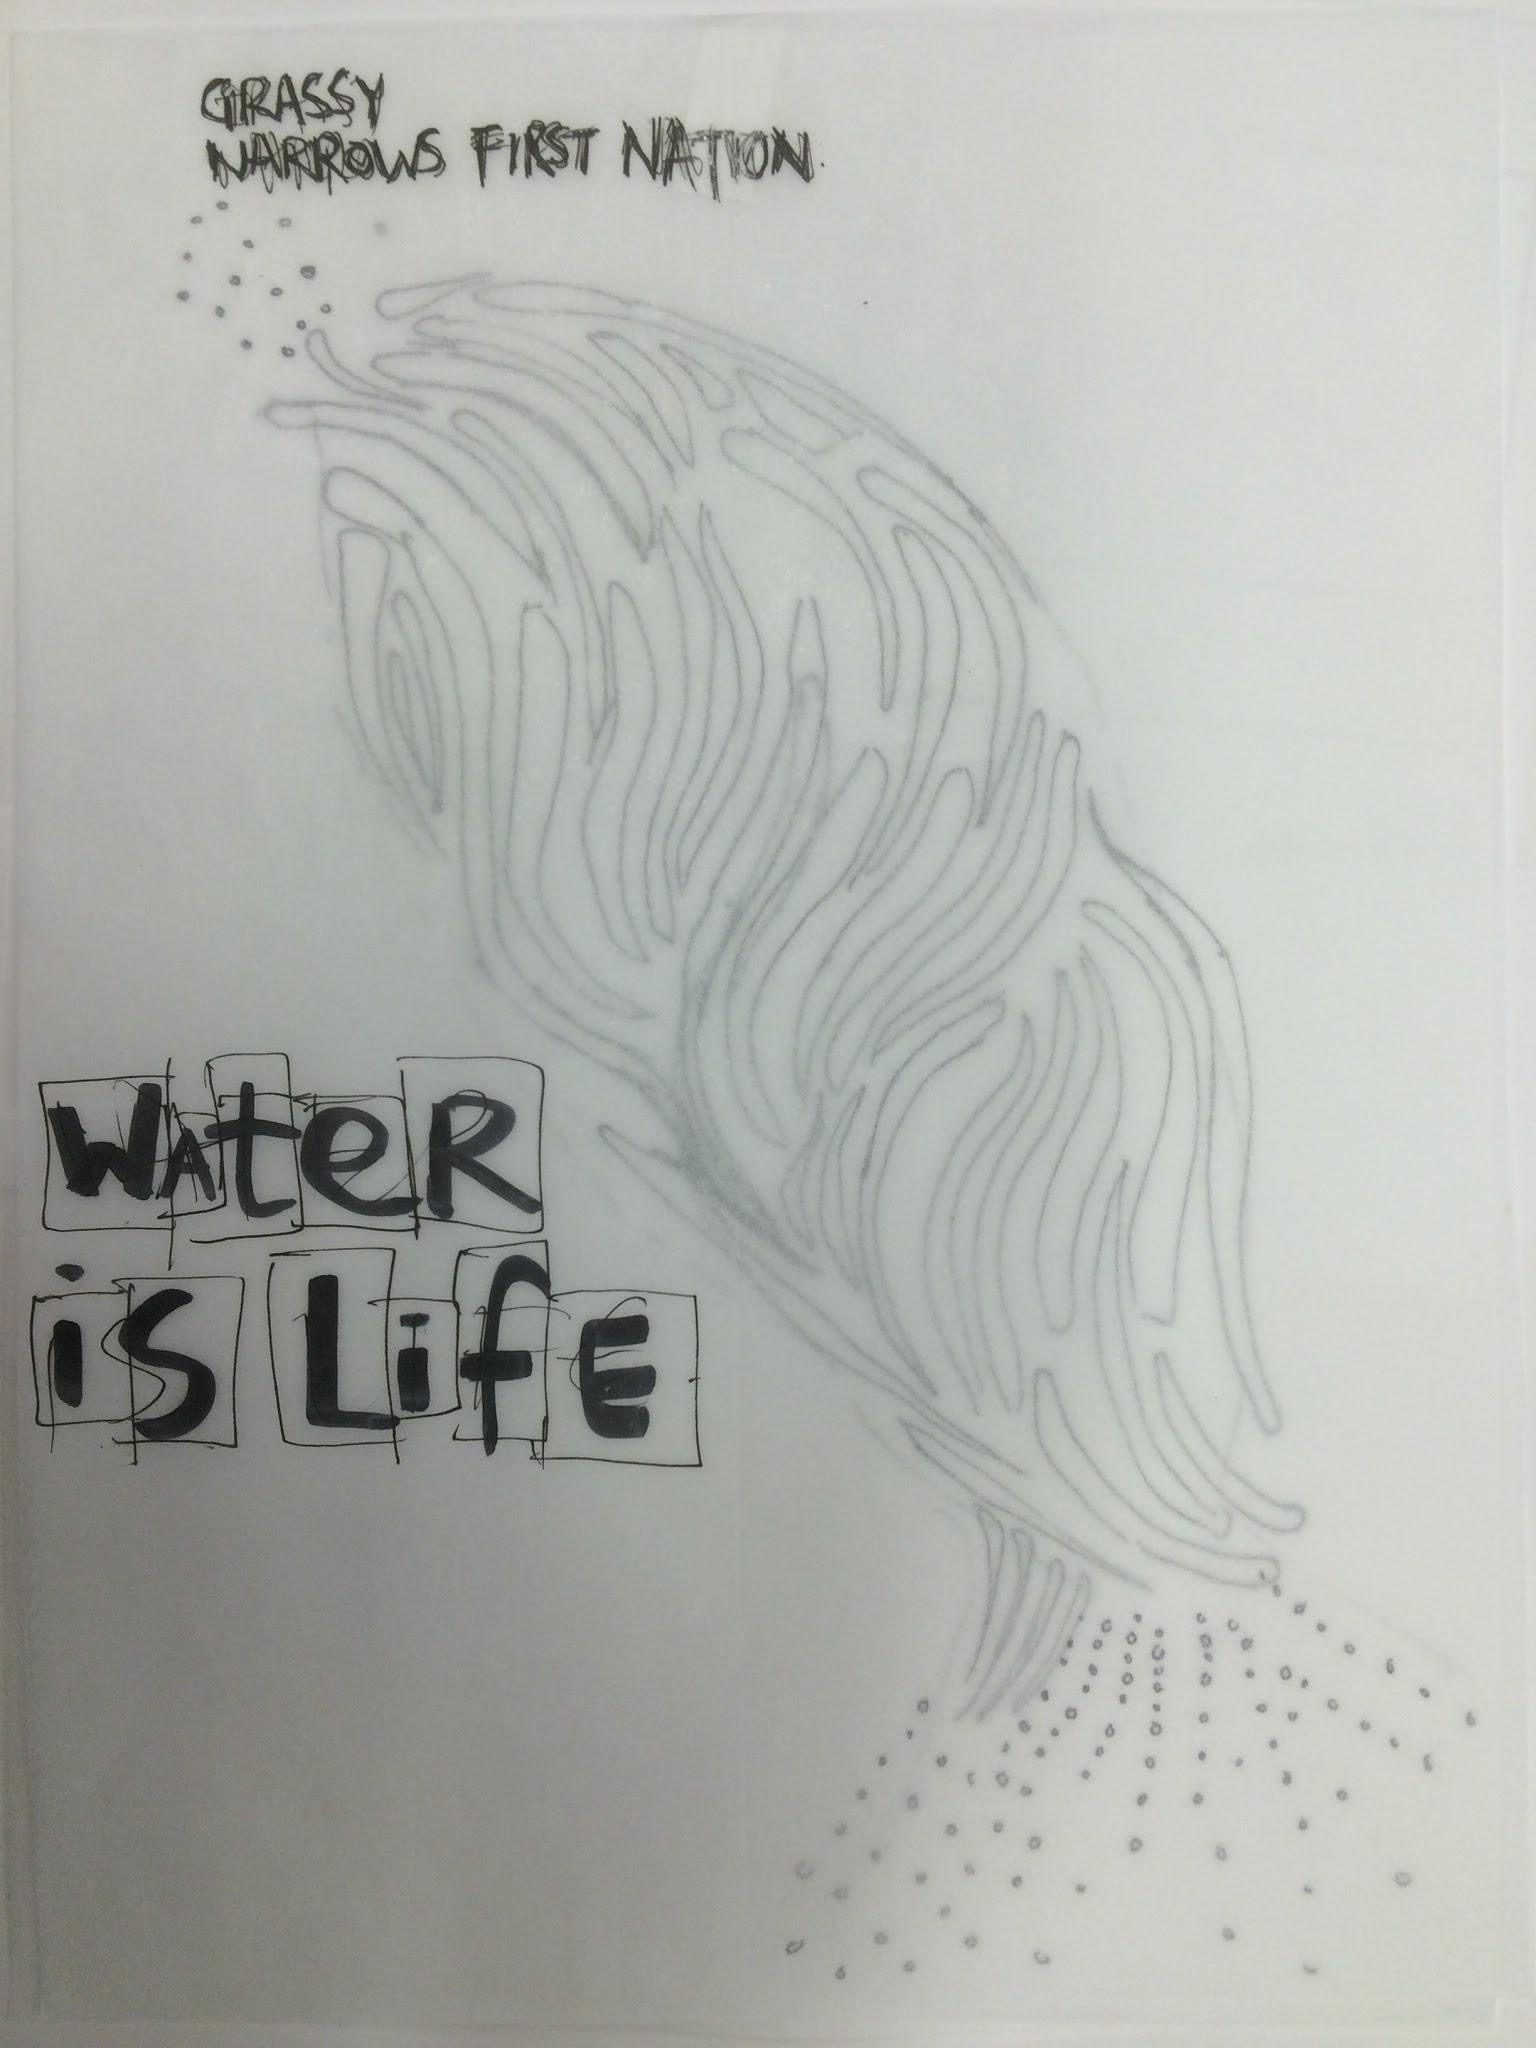 Water is Life' development posters | Phantomcoconuts's Blog